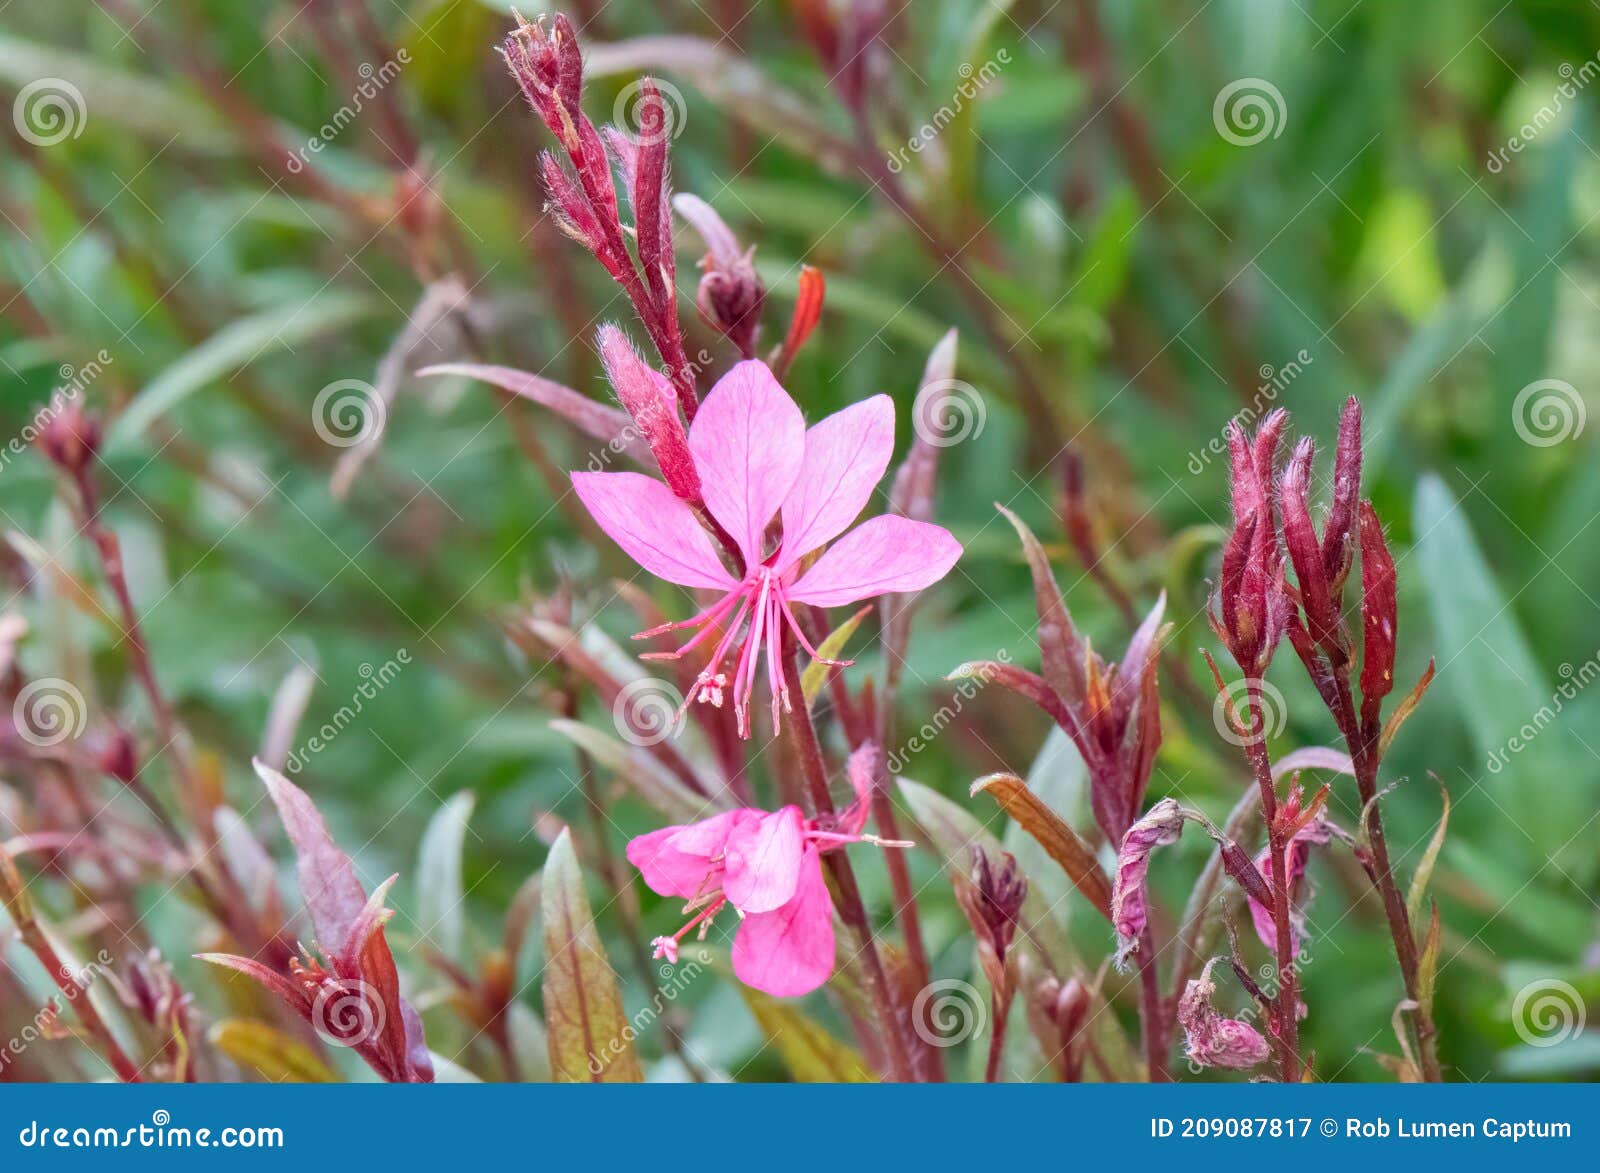 lindheimerâs bee-blossom gaura lindheimeri pink flowers